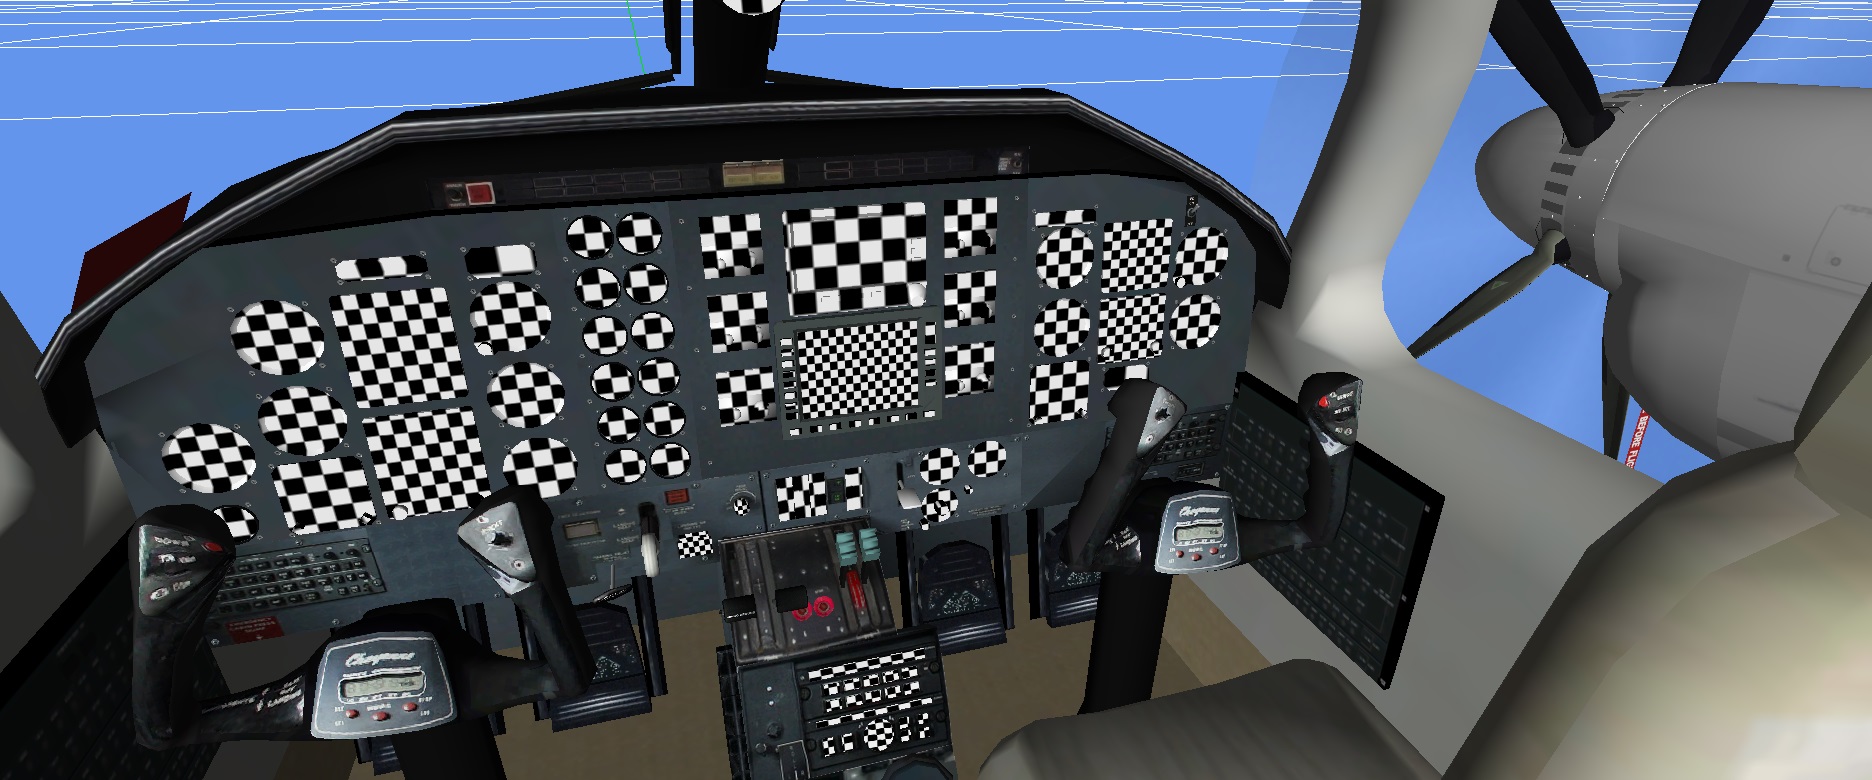 VC_cockpit1.jpg